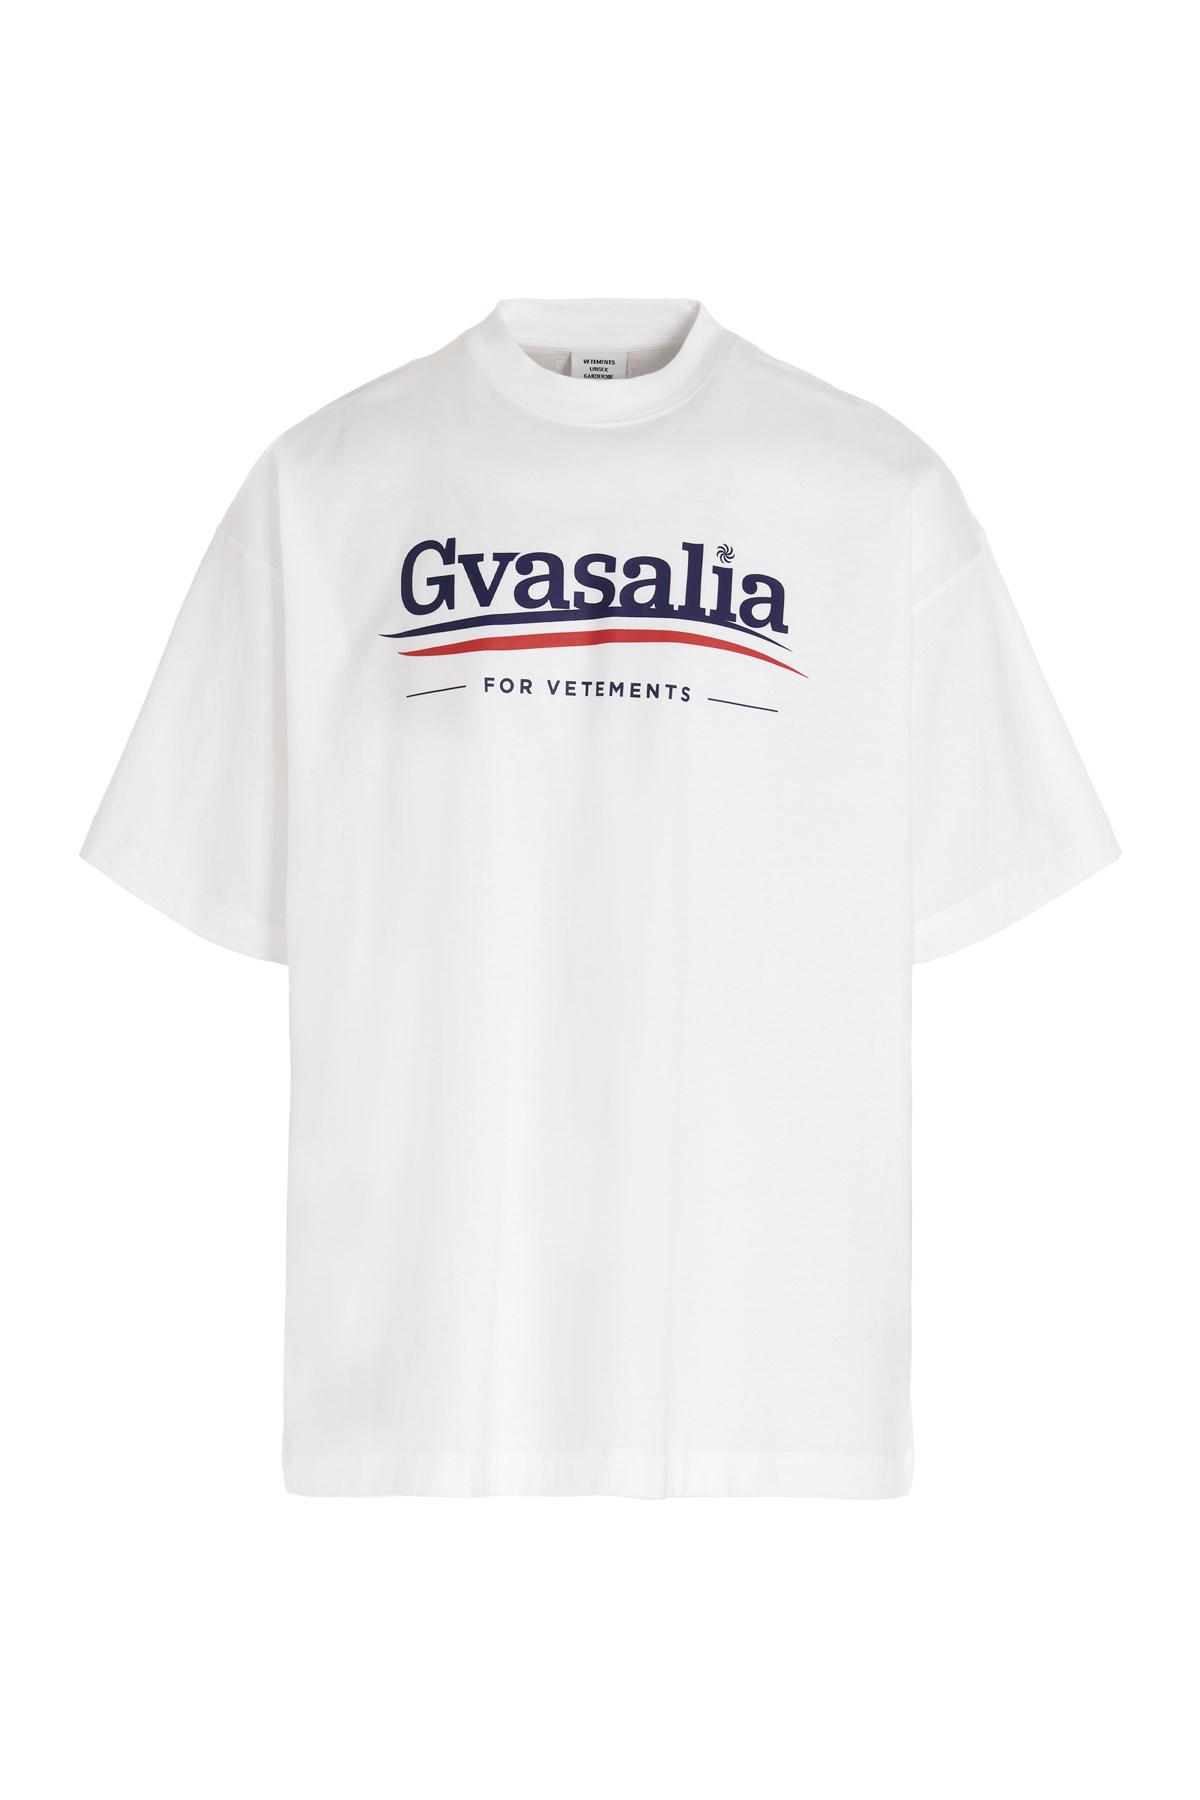 VETEMENTS T-Shirt 'Gvasalia For Vetements'